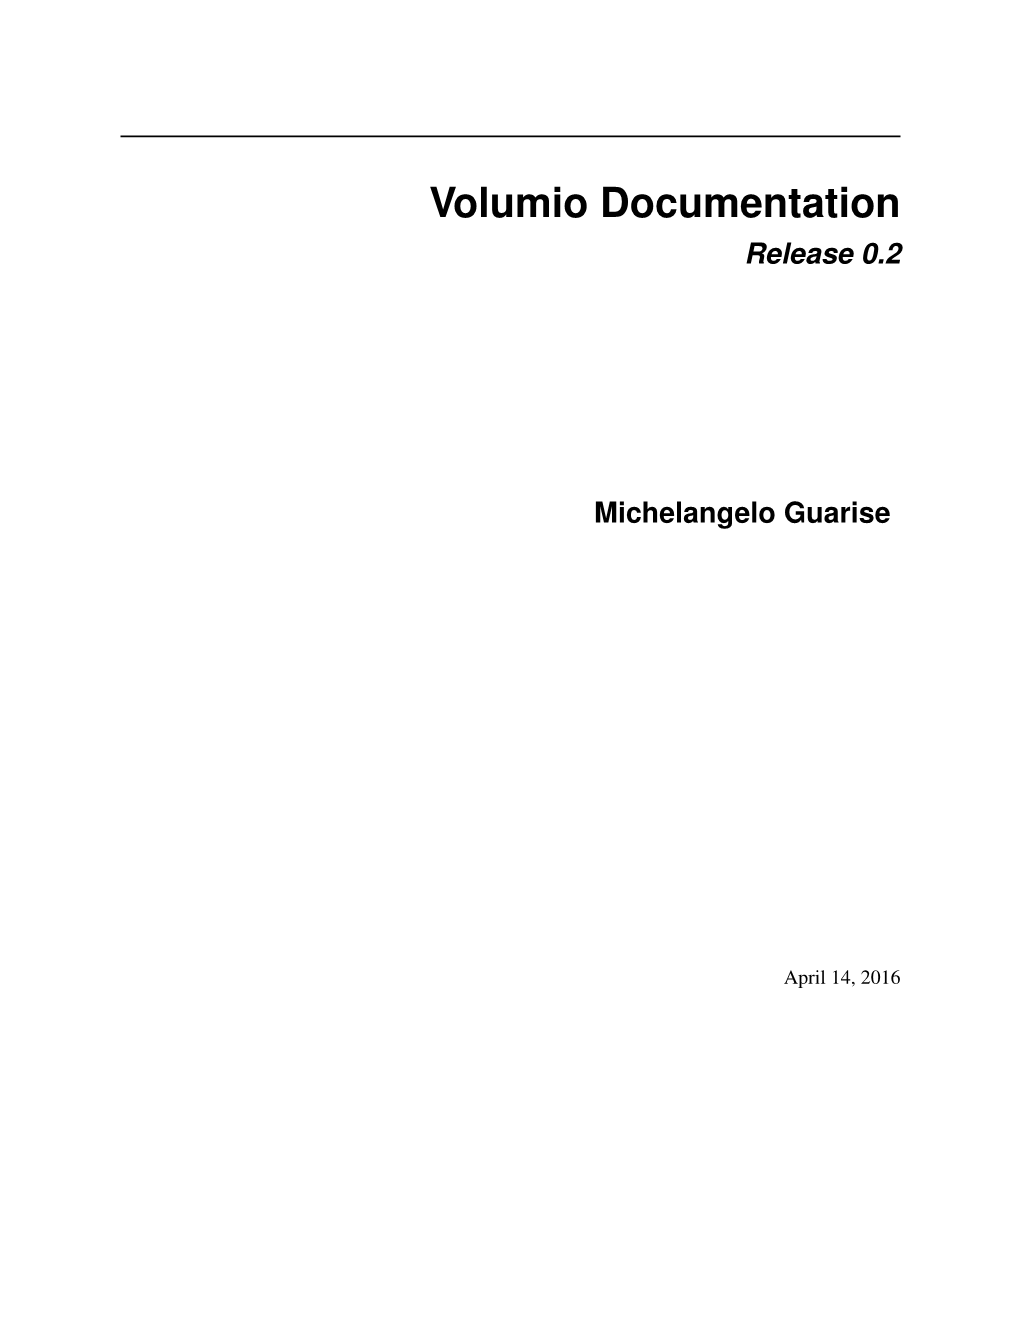 Volumio Documentation Release 0.2